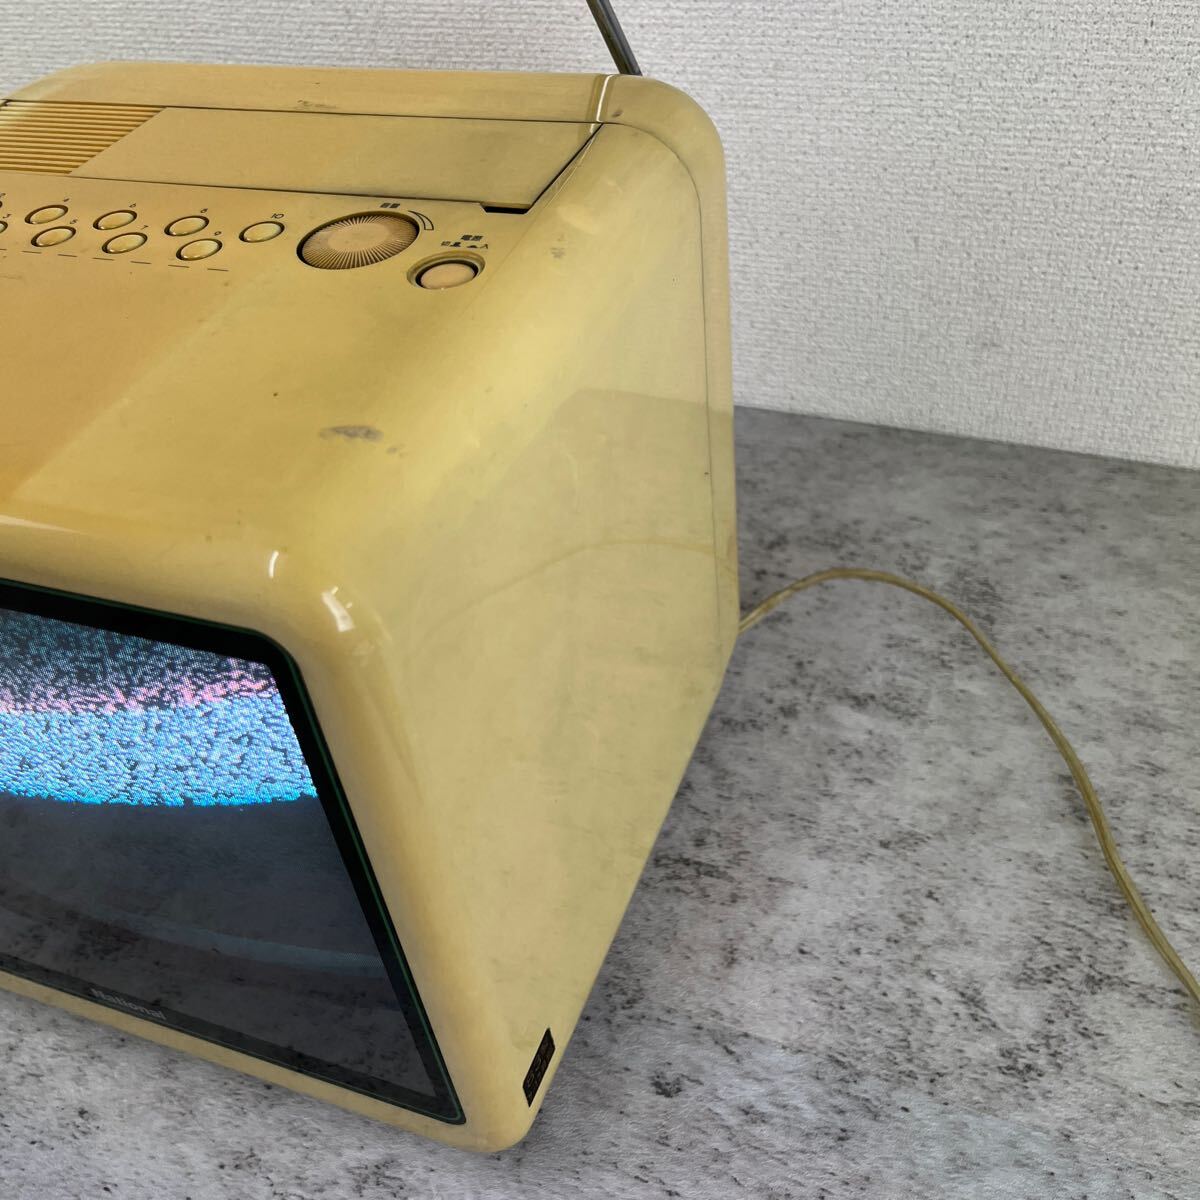 National National color tv TH11-S9 electrification has confirmed Showa era consumer electronics retro 